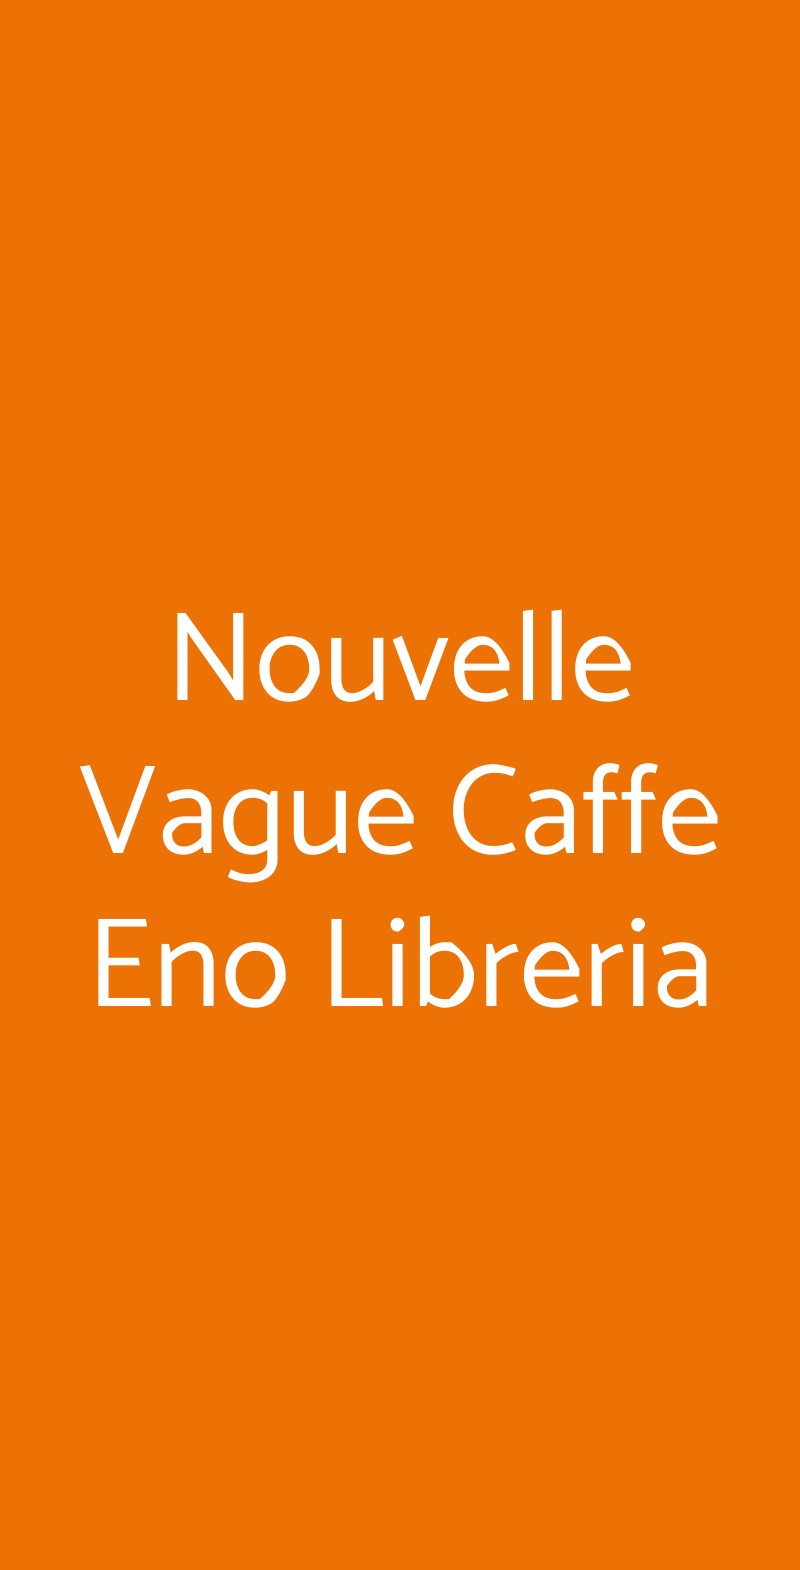 Nouvelle Vague Caffe Eno Libreria Genova menù 1 pagina